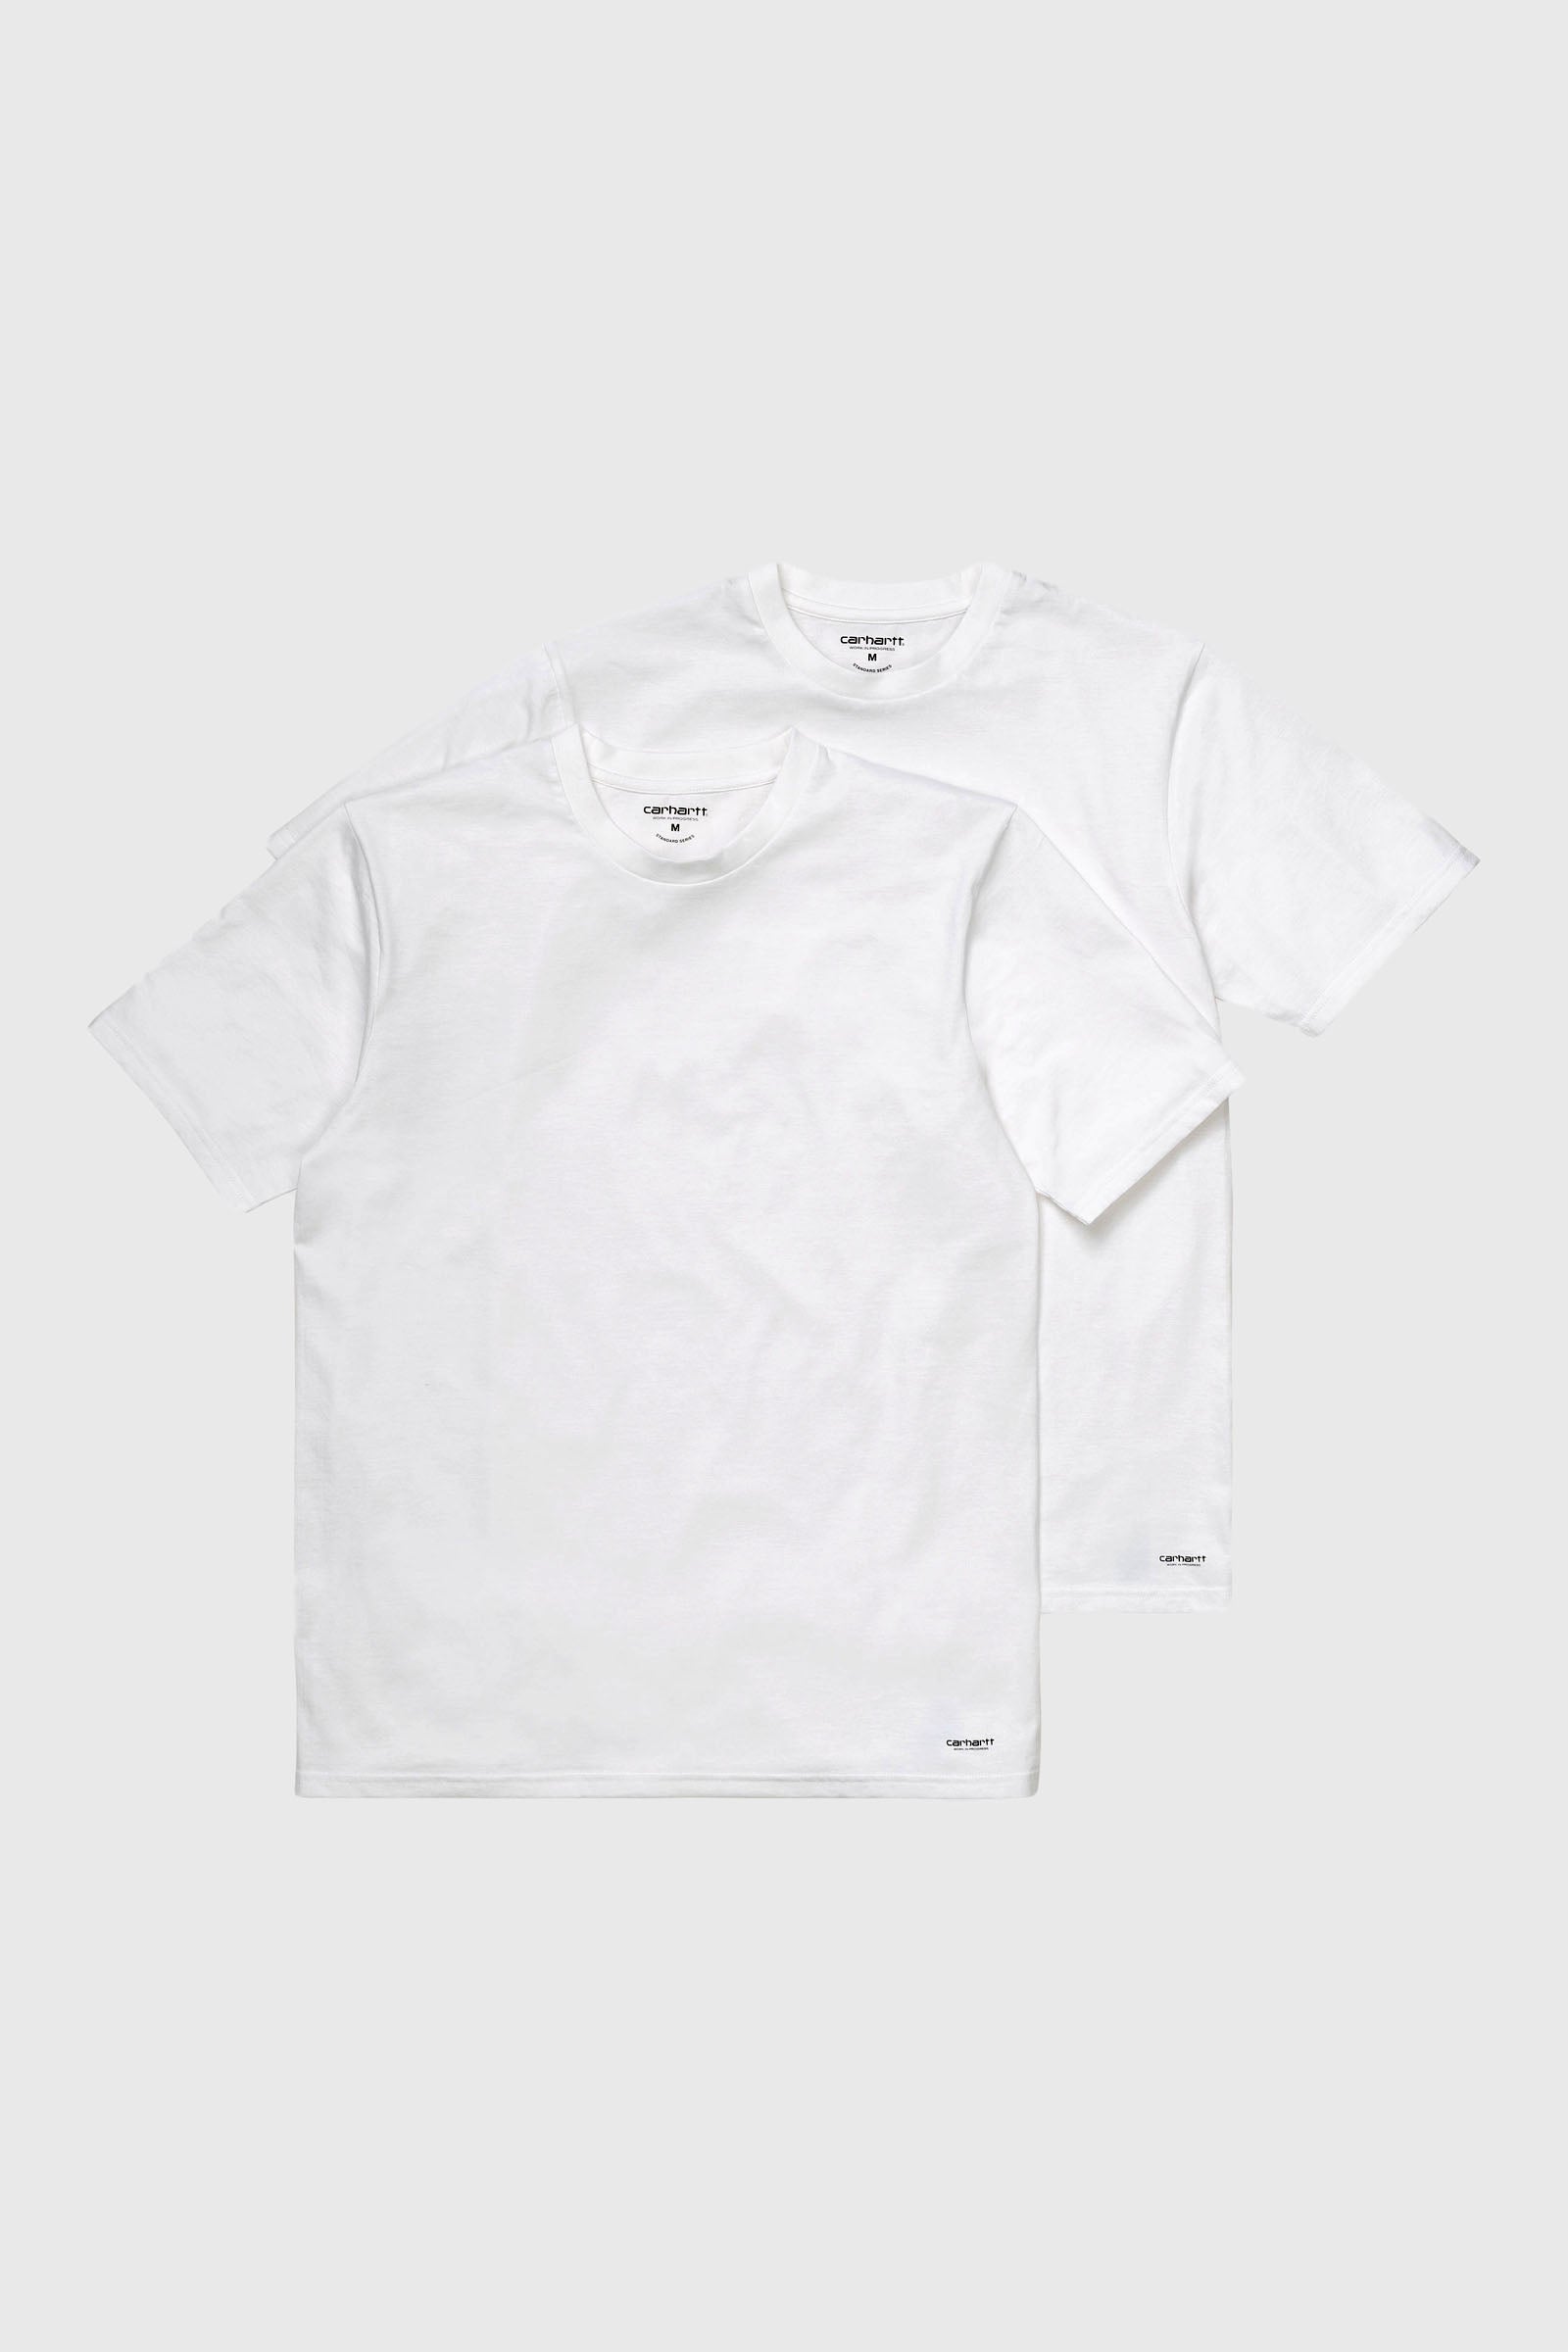 Carhartt WIP Standard Crew Neck Cotton T-Shirt White - 2